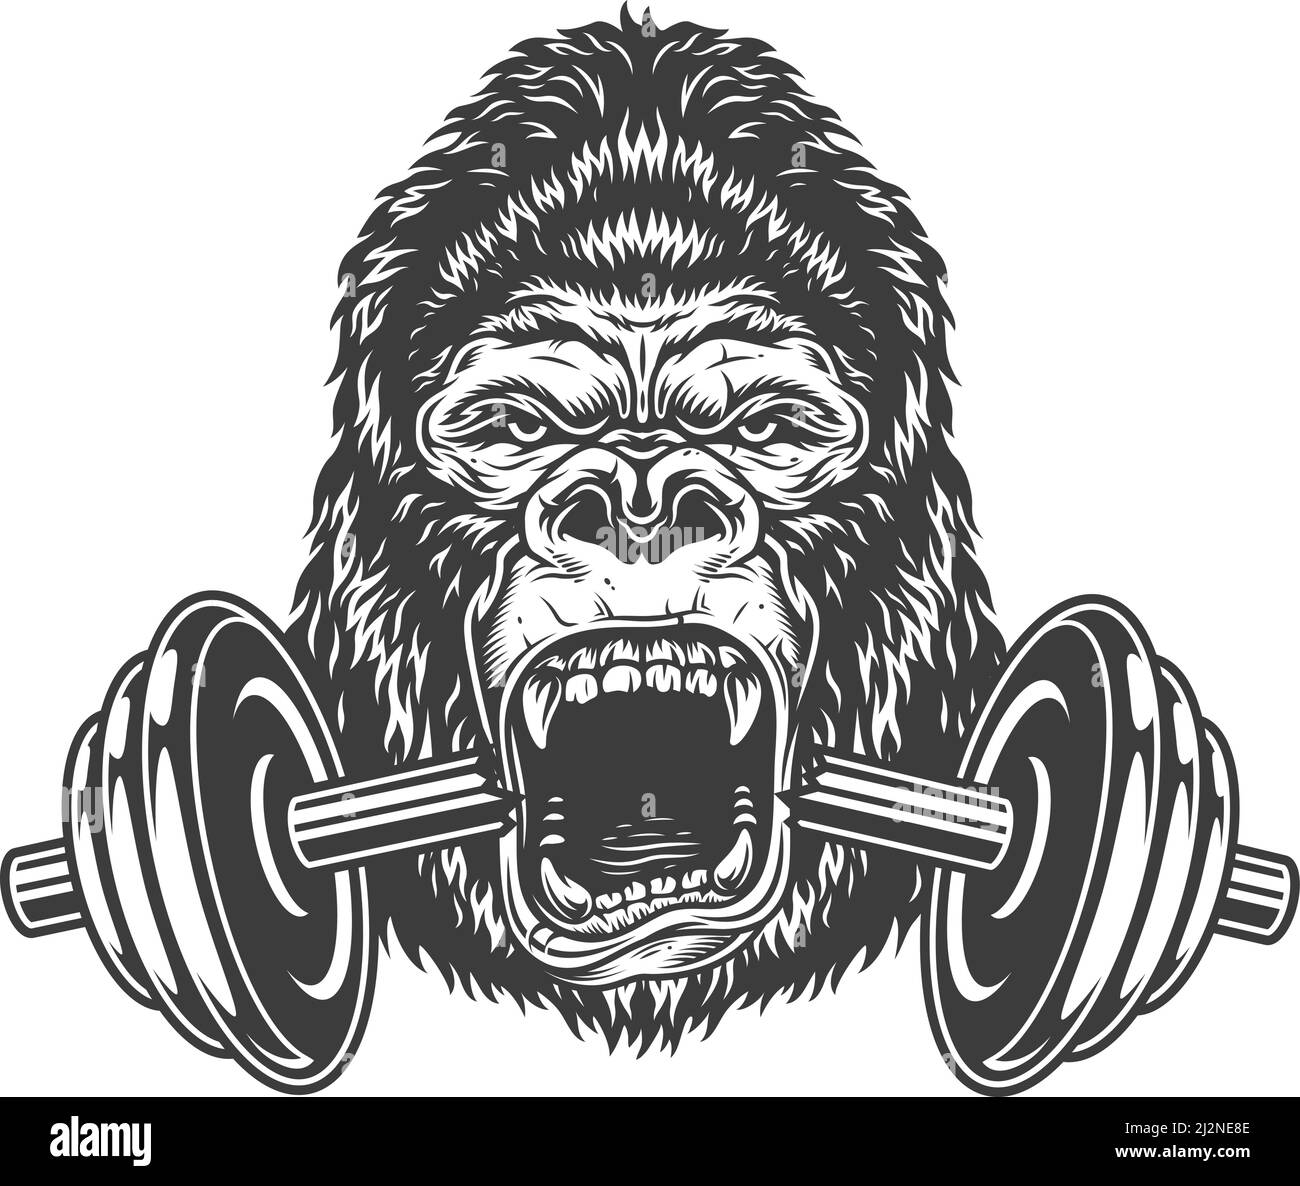 Bodybuilding-Konzept mit Gorilla und rissiger Hantel. Vektorgrafik. Stock Vektor